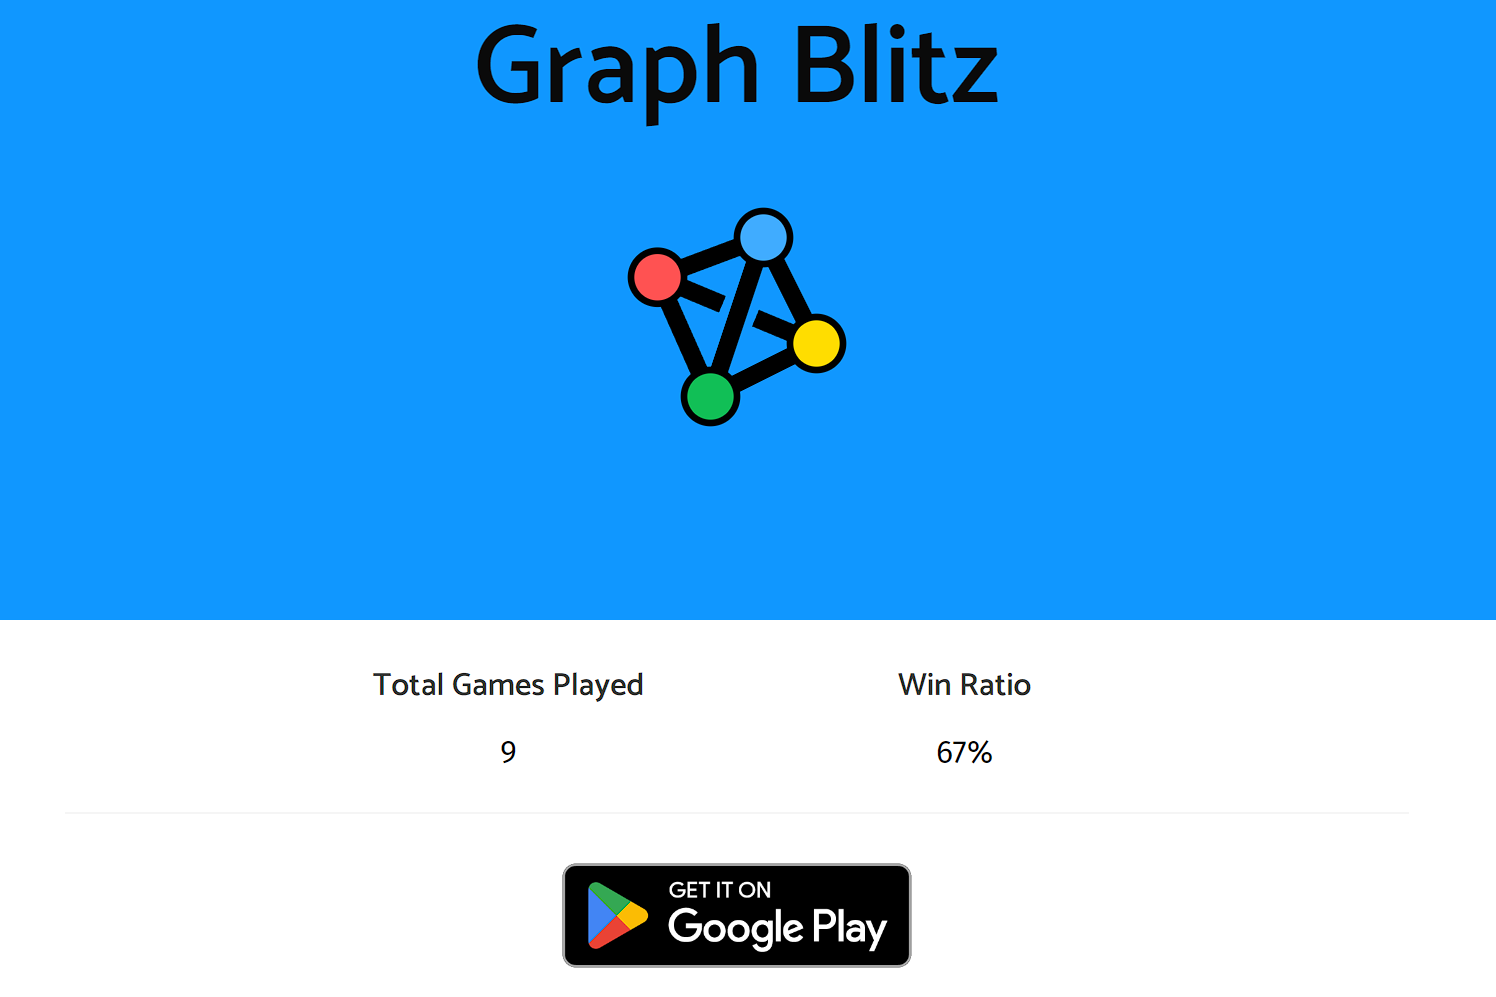 Graph Blitz logo and title